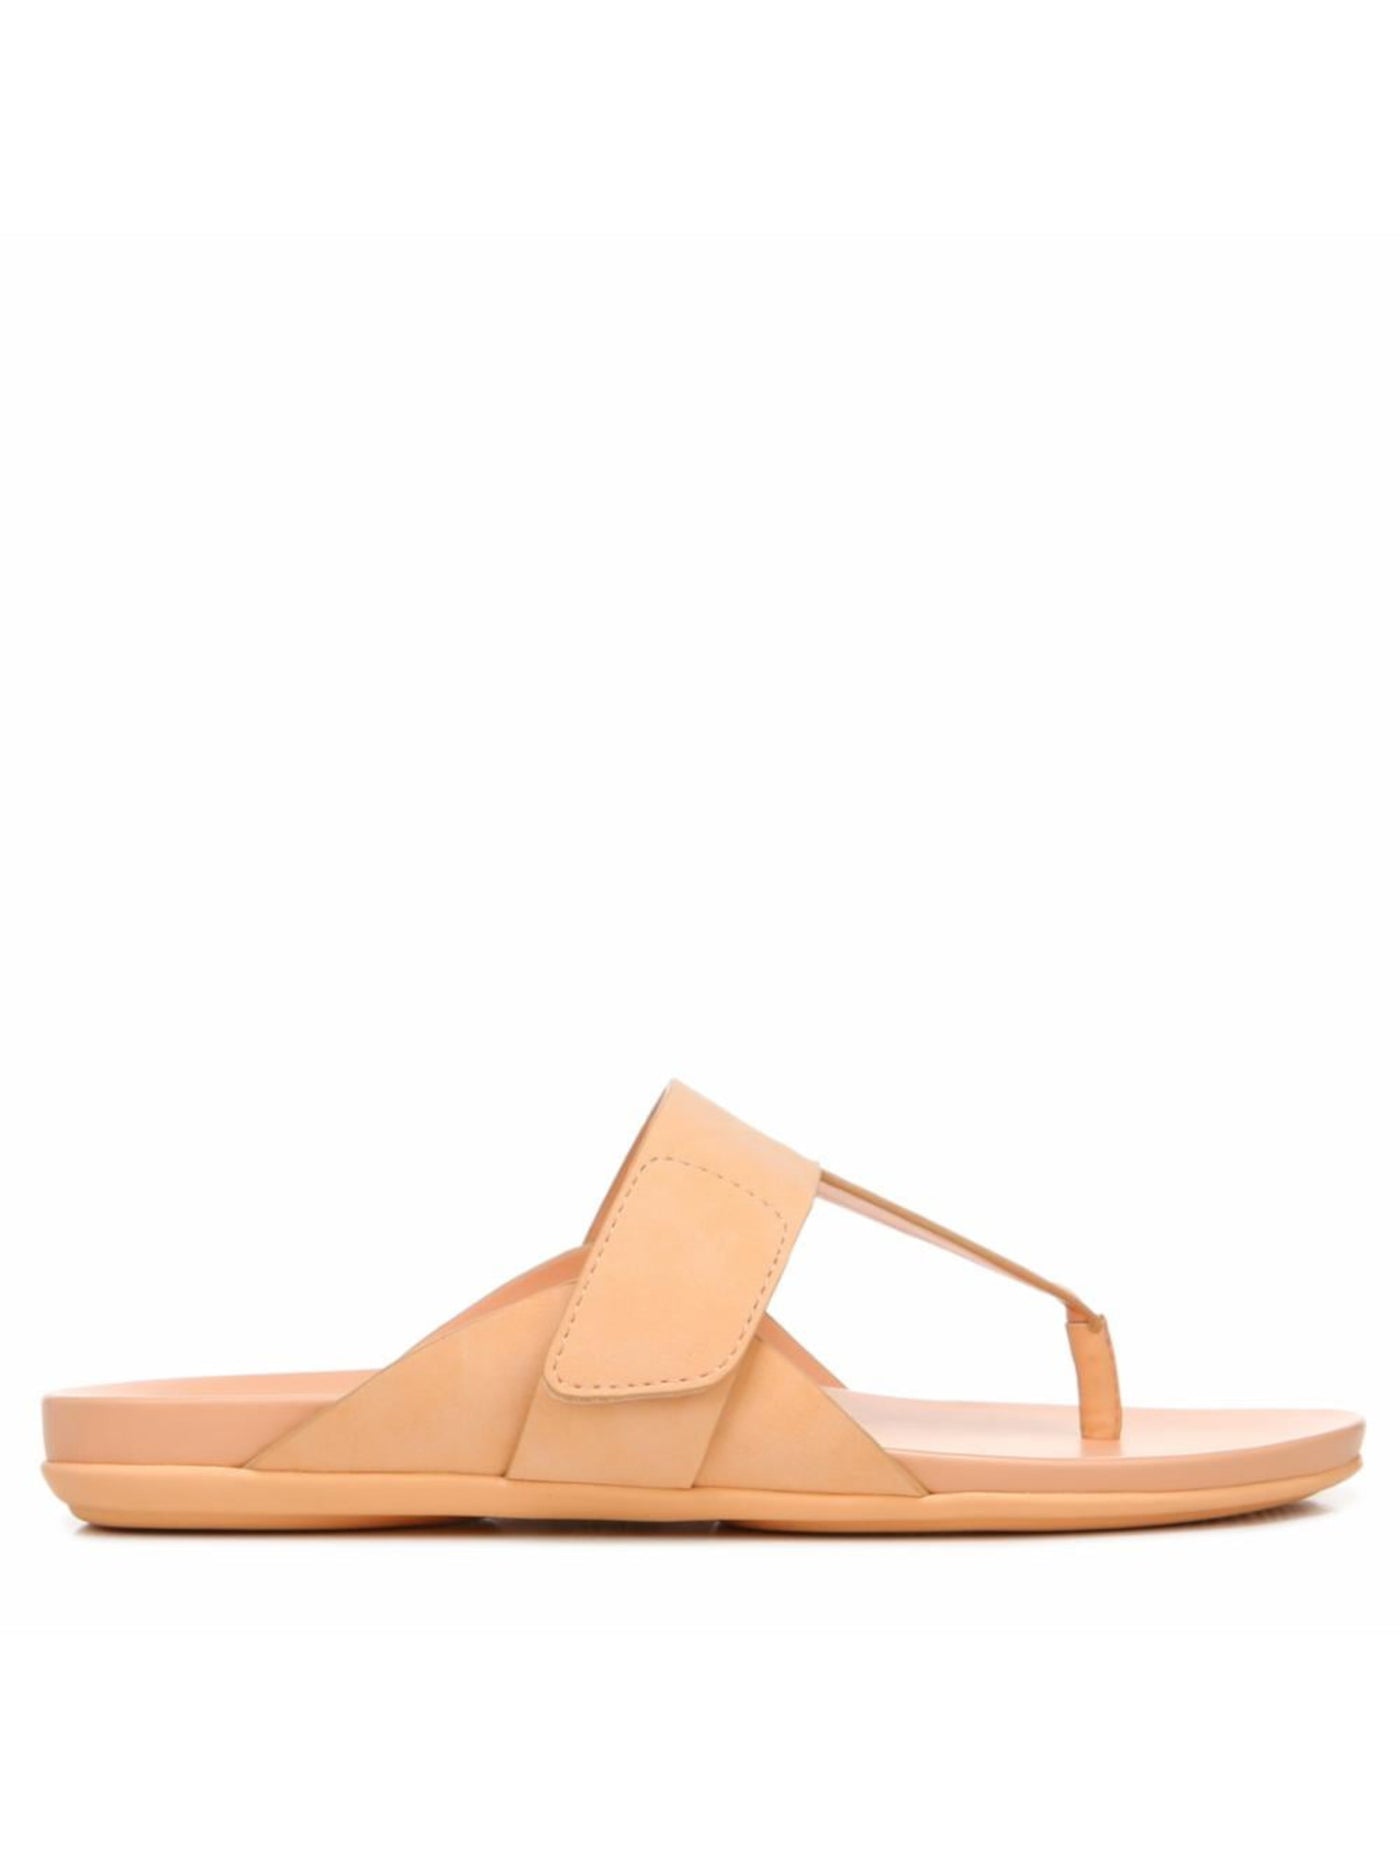 NATURALIZER Womens Orange Slip Resistant Adjustable Genn-twirl Round Toe Wedge Slip On Thong Sandals Shoes 8 M